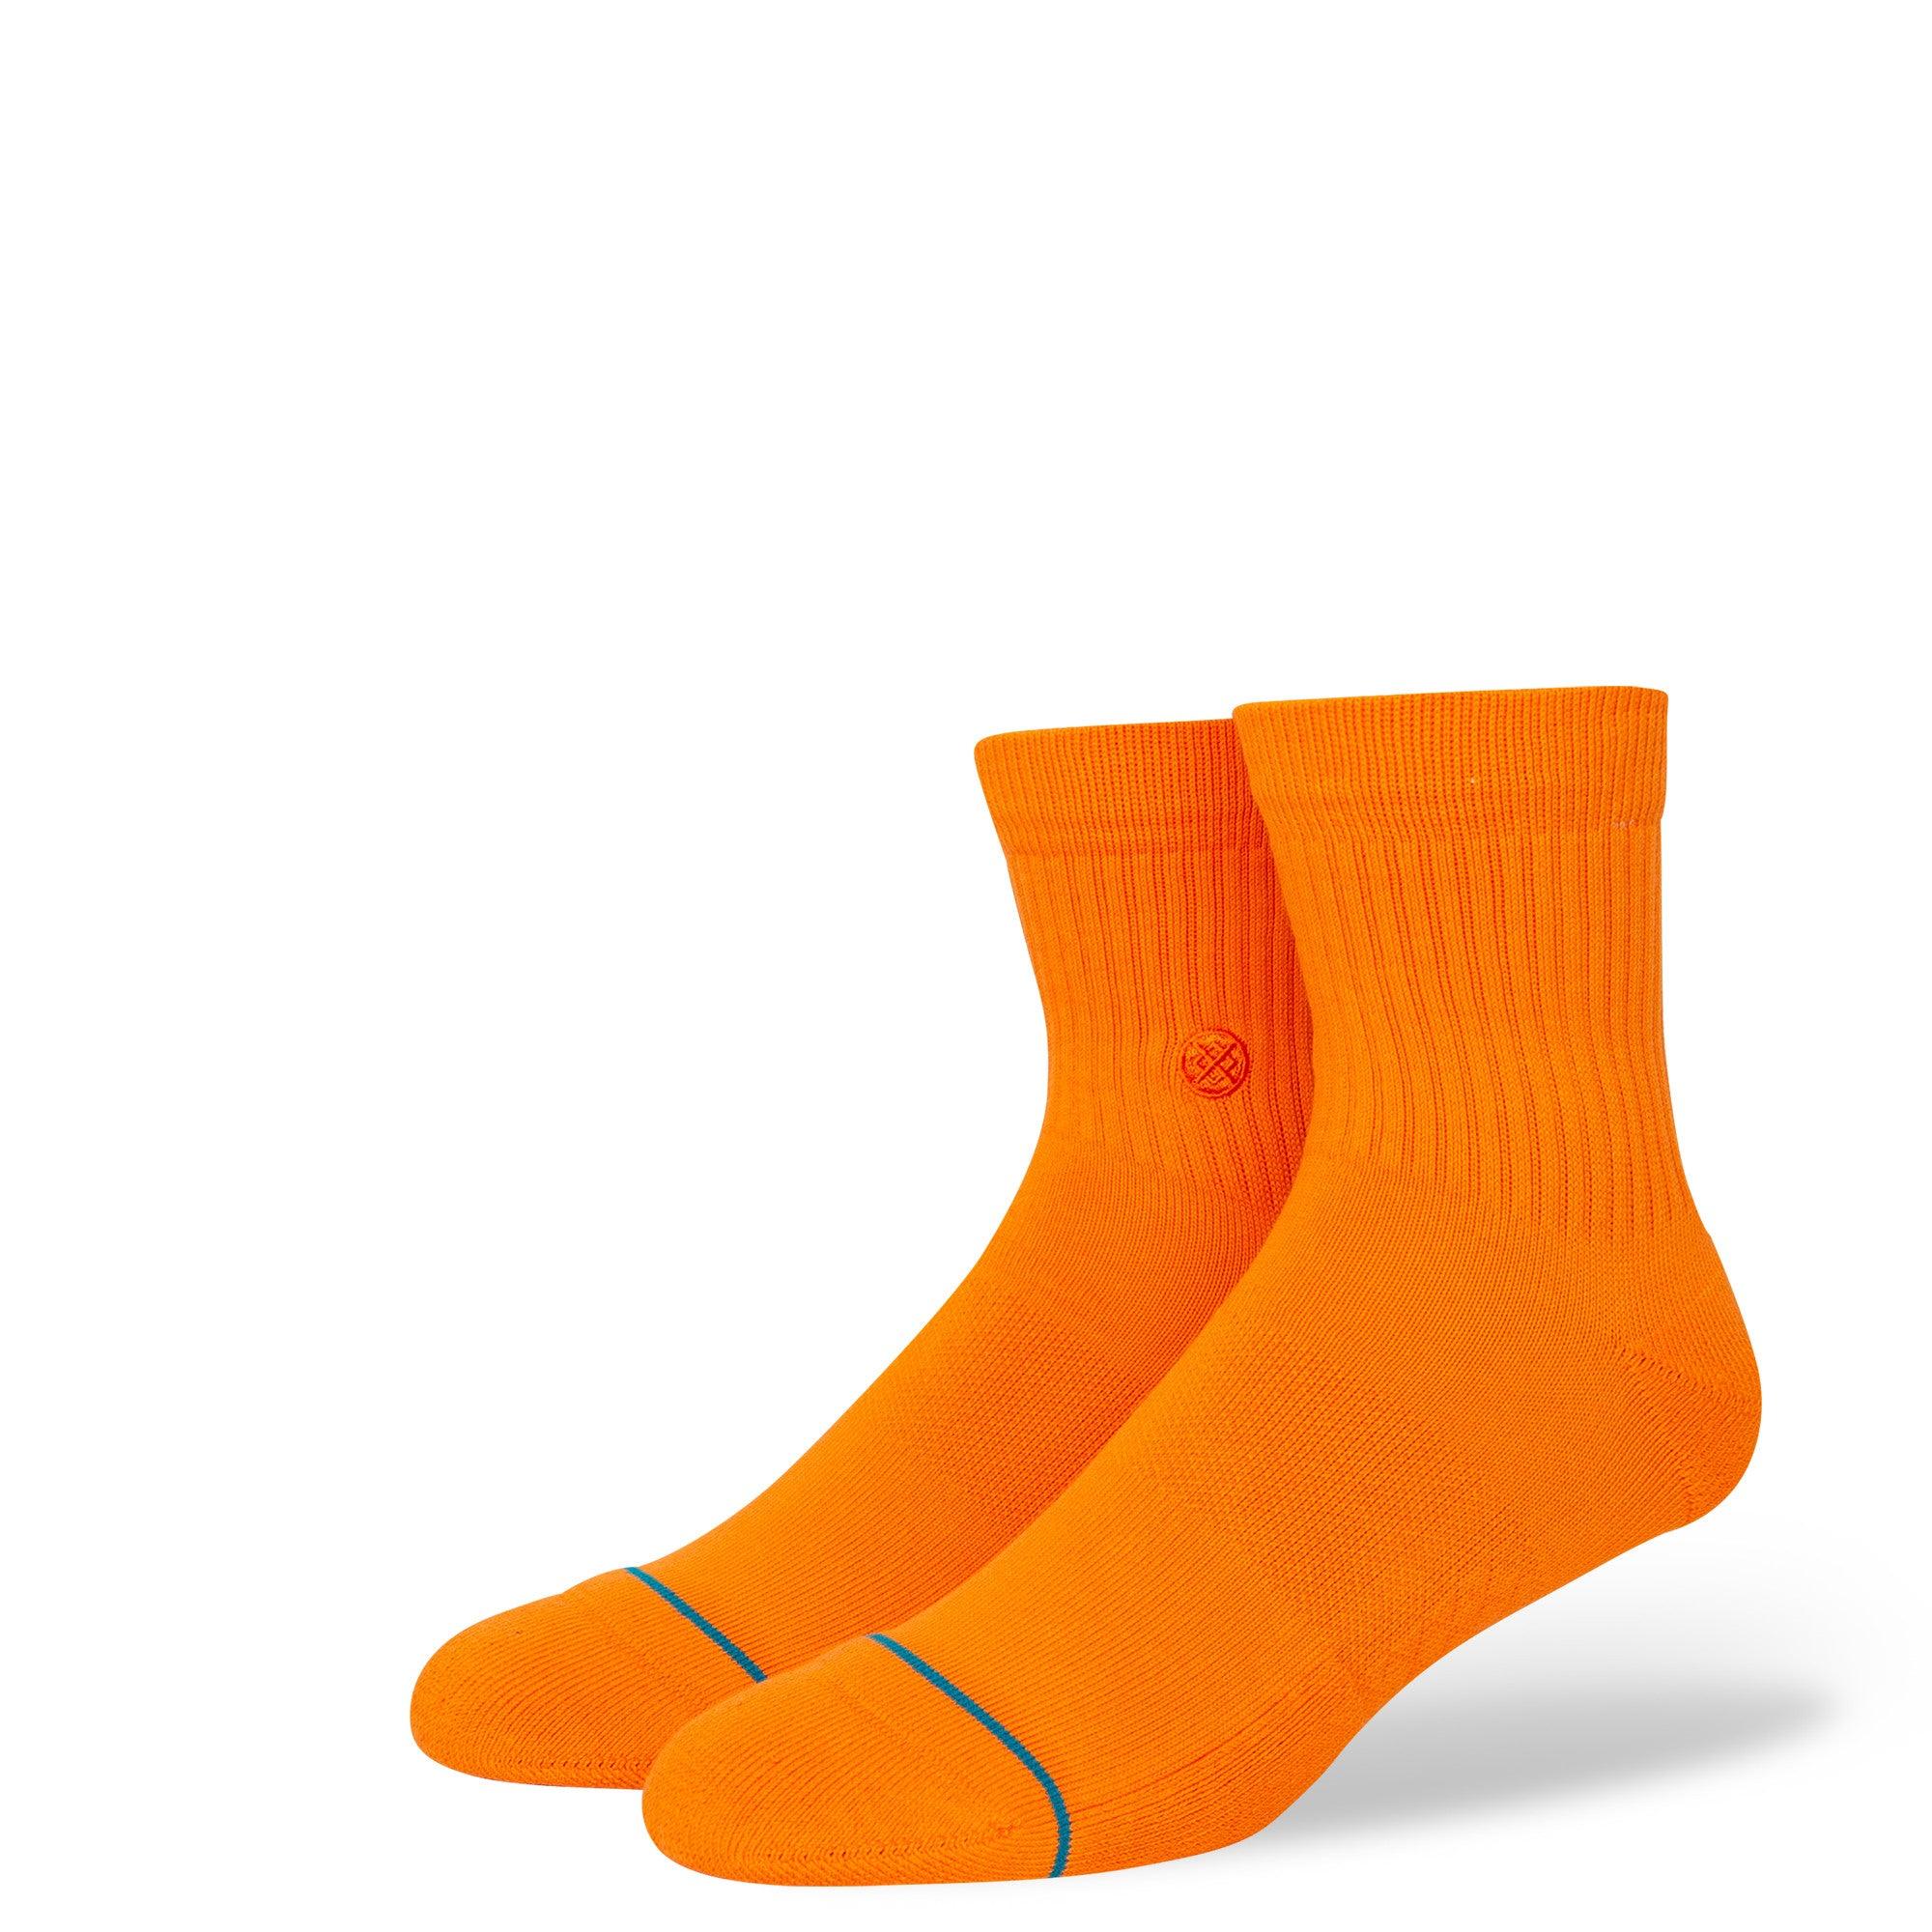 Stance Icon Quarter Ankle Socks in Rebel Rose for men and women